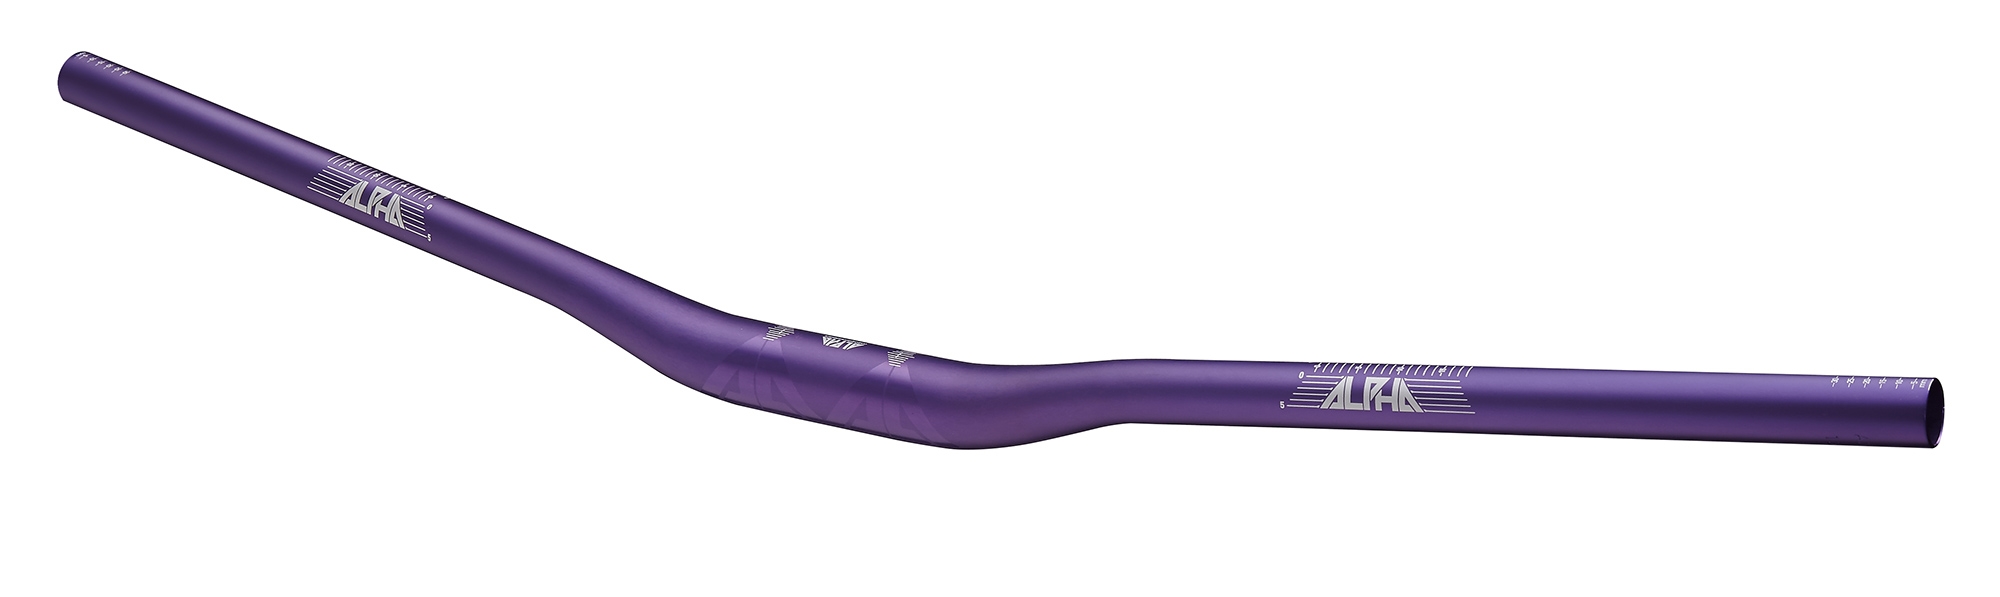 Manillar Ride Alpha purple